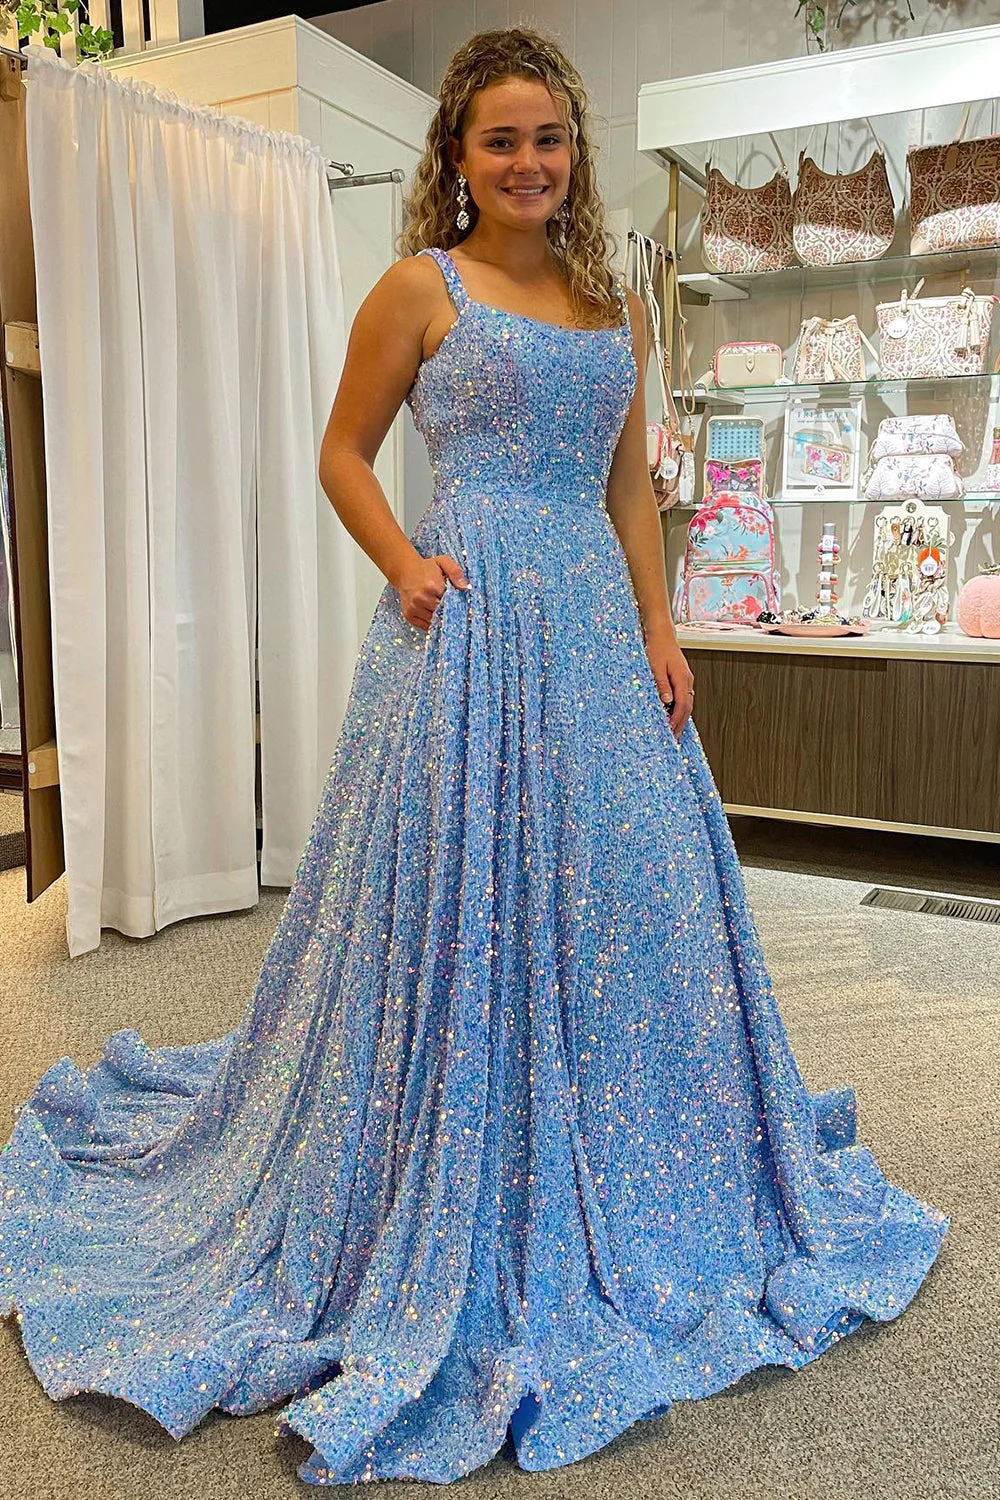 A Line Square Neck Light Blue Sequins Long Prom Dress nv679